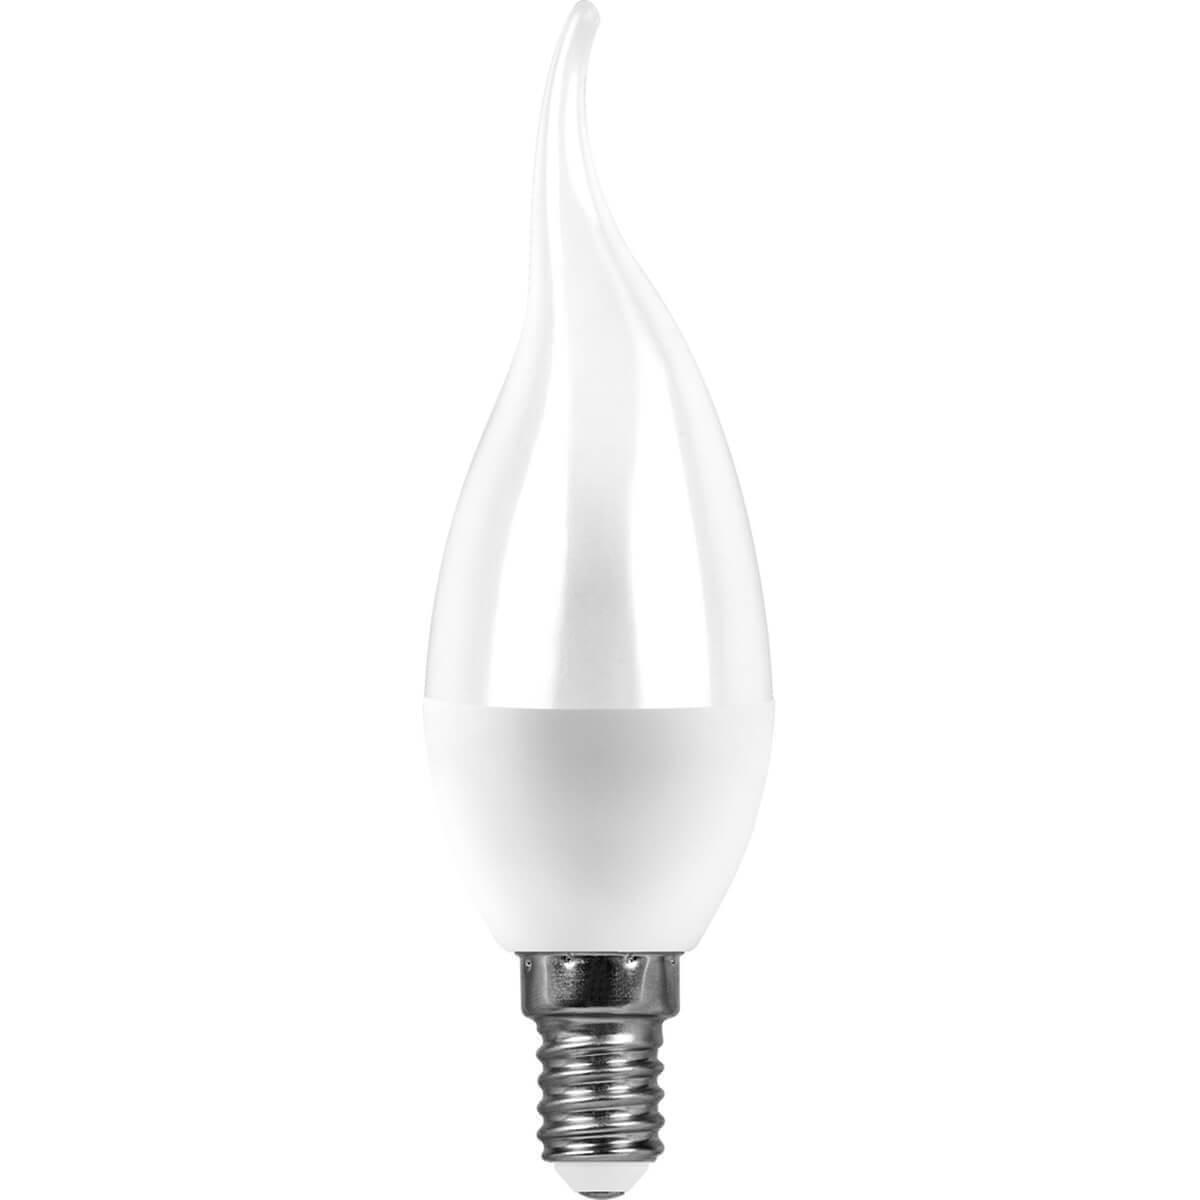 Лампа светодиодная Feron E14 7W 4000K Свеча матвоая LB-97 25476